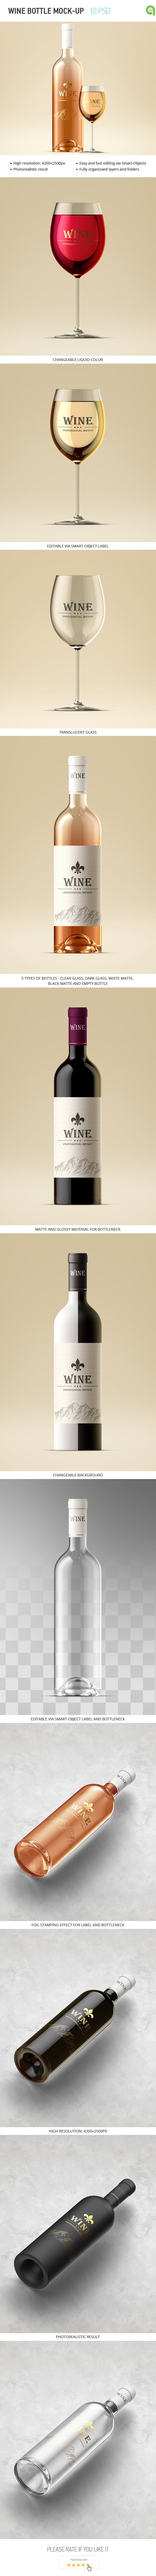 bottle wine Mockup psd photoshop template glass Label logo brand